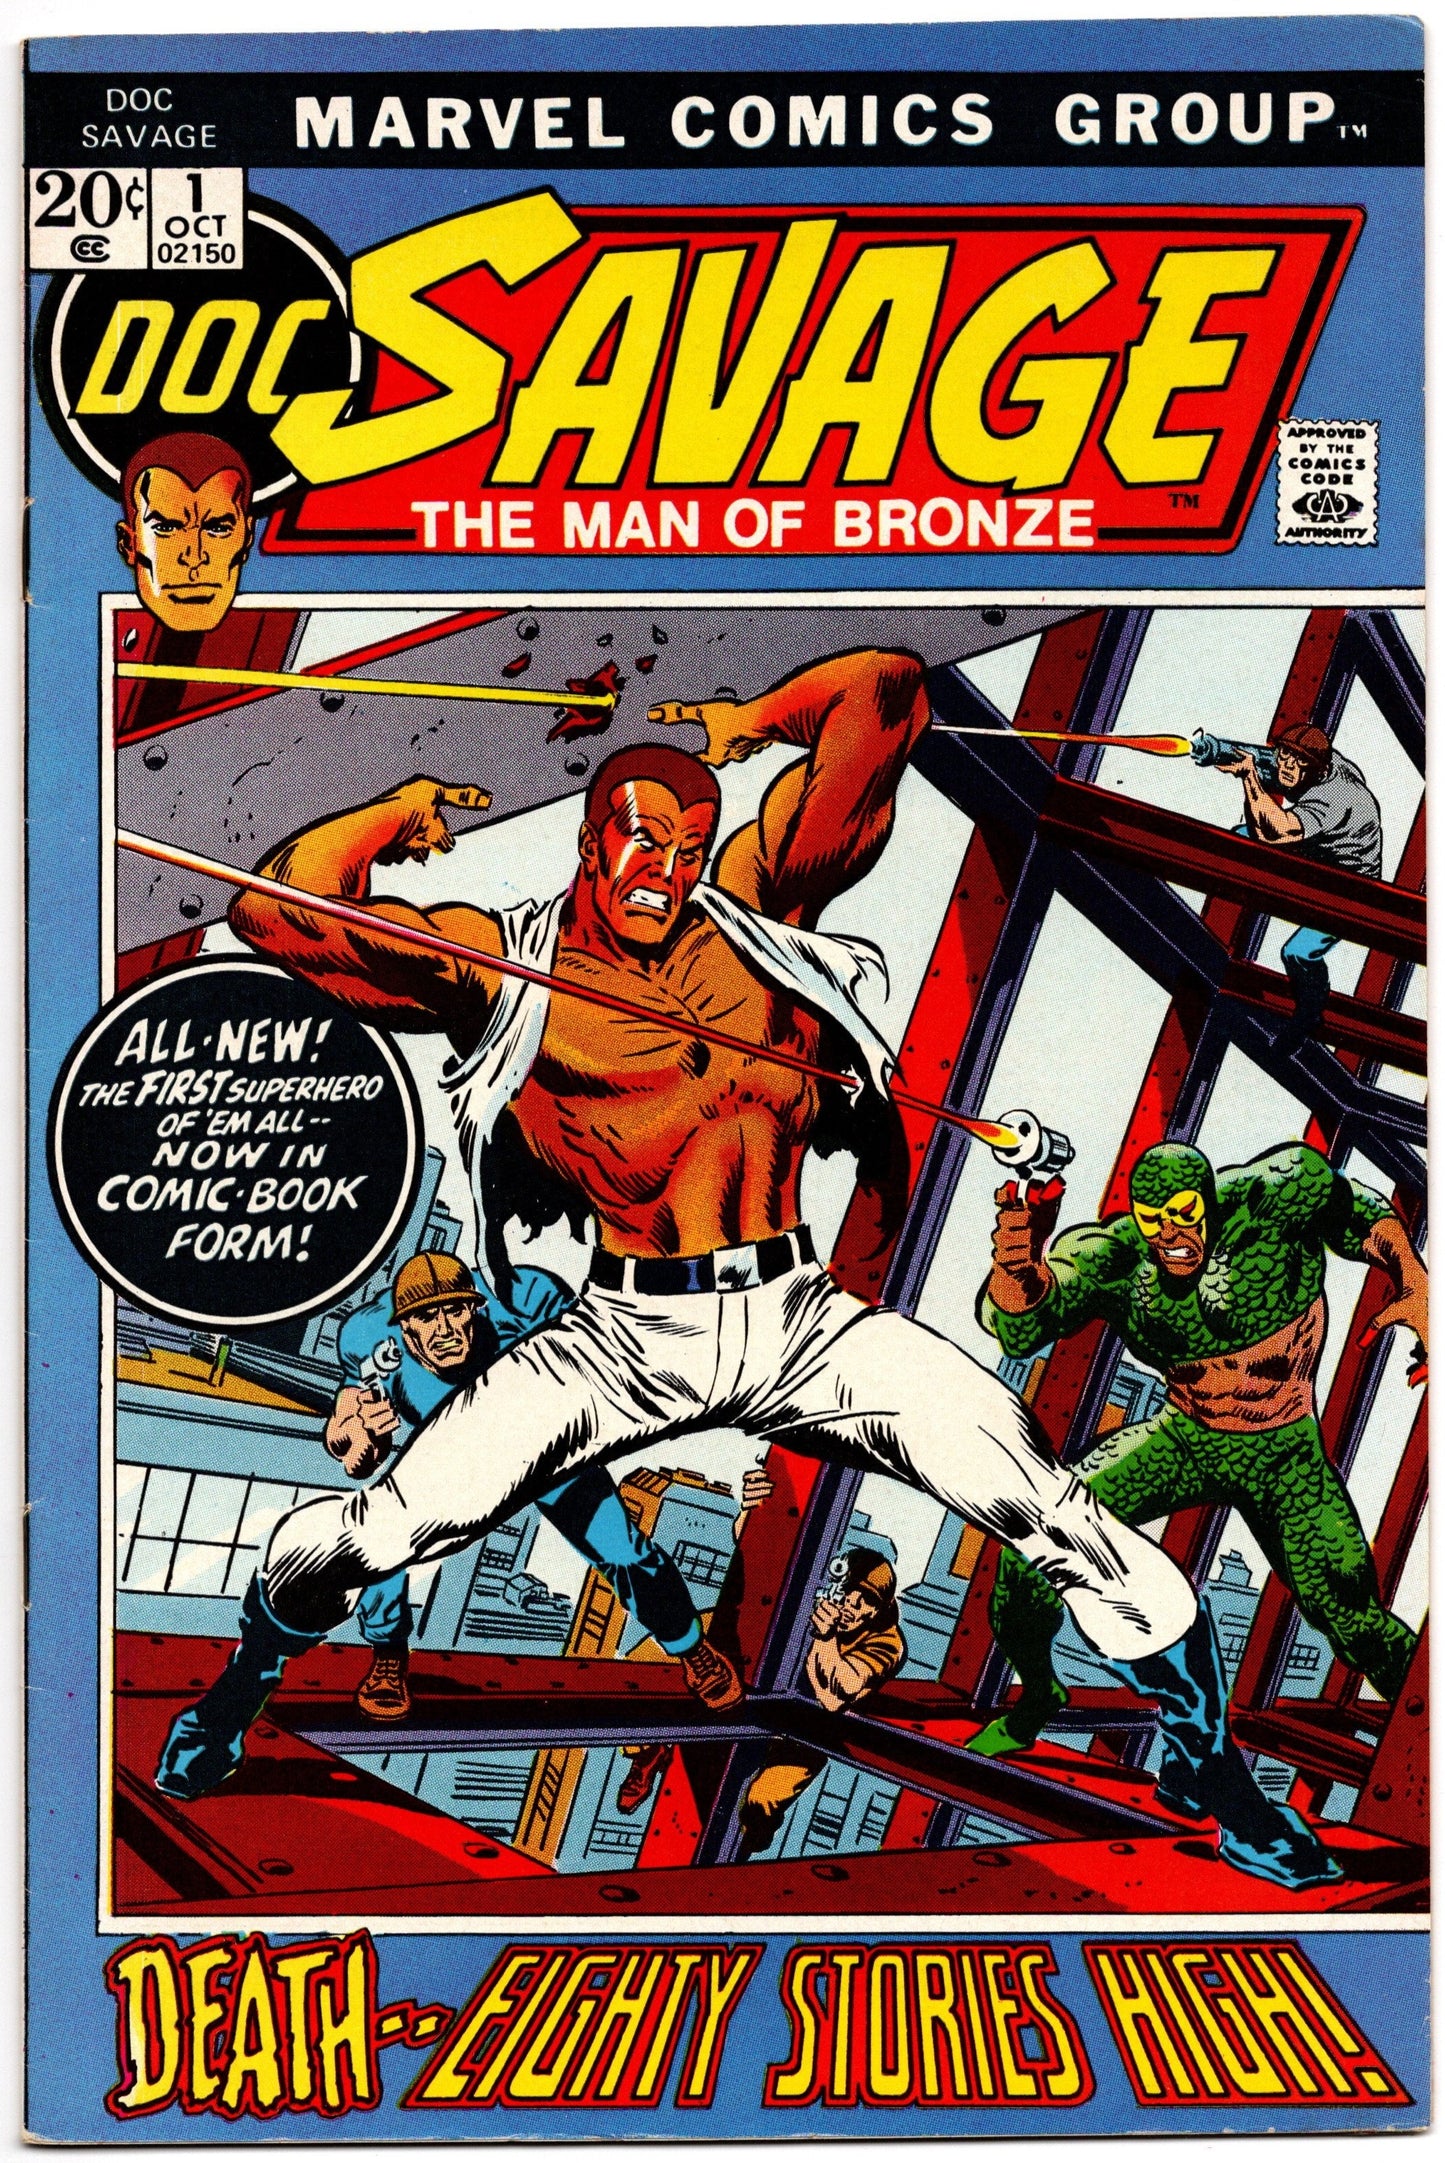 Doc Savage (1972) #1